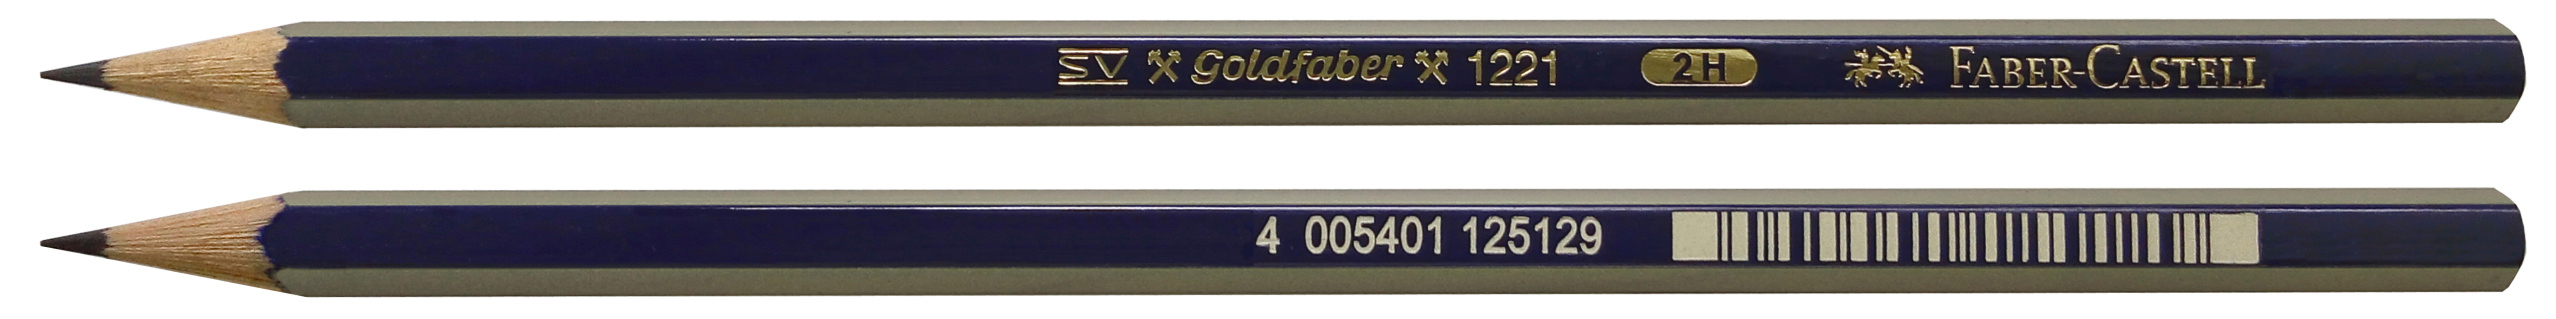 FABER-CASTELL Crayon 2H 112512 Goldfaber Goldfaber